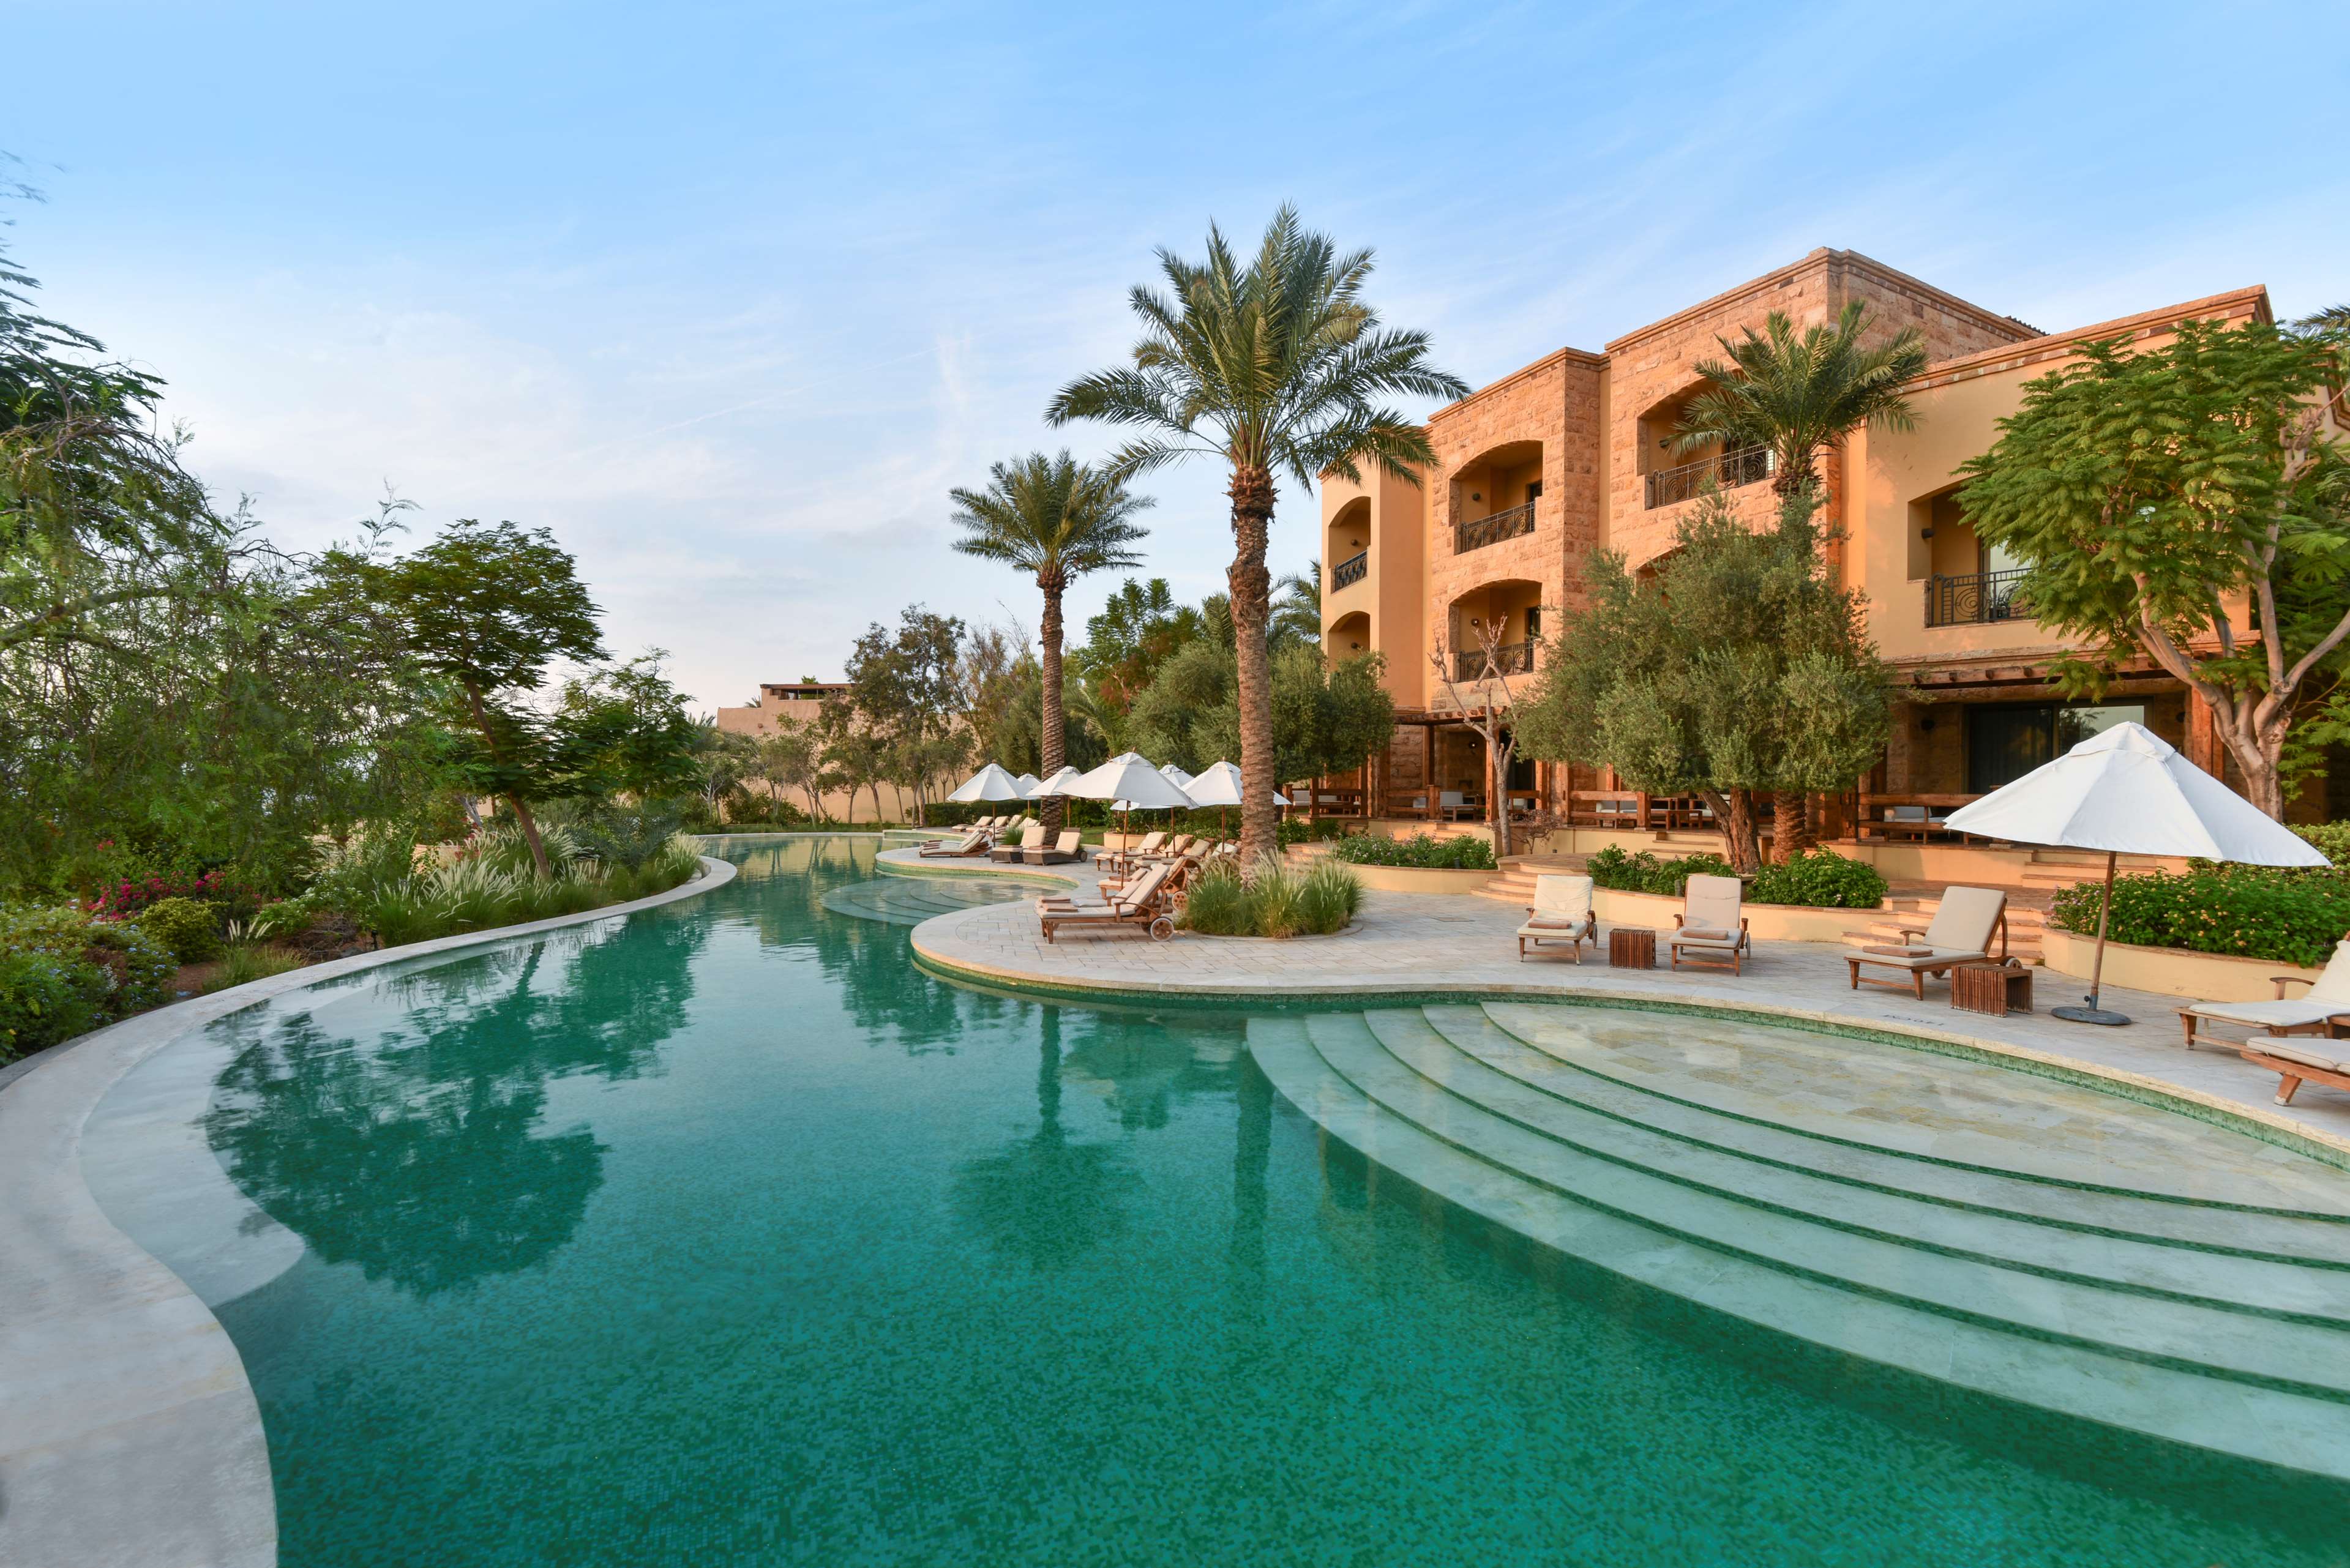 Bonus Virus Whirlpool 5 Star Luxury Hotel in Ishtar, Jordan|Kempinski Hotel Ishtar Dead Sea